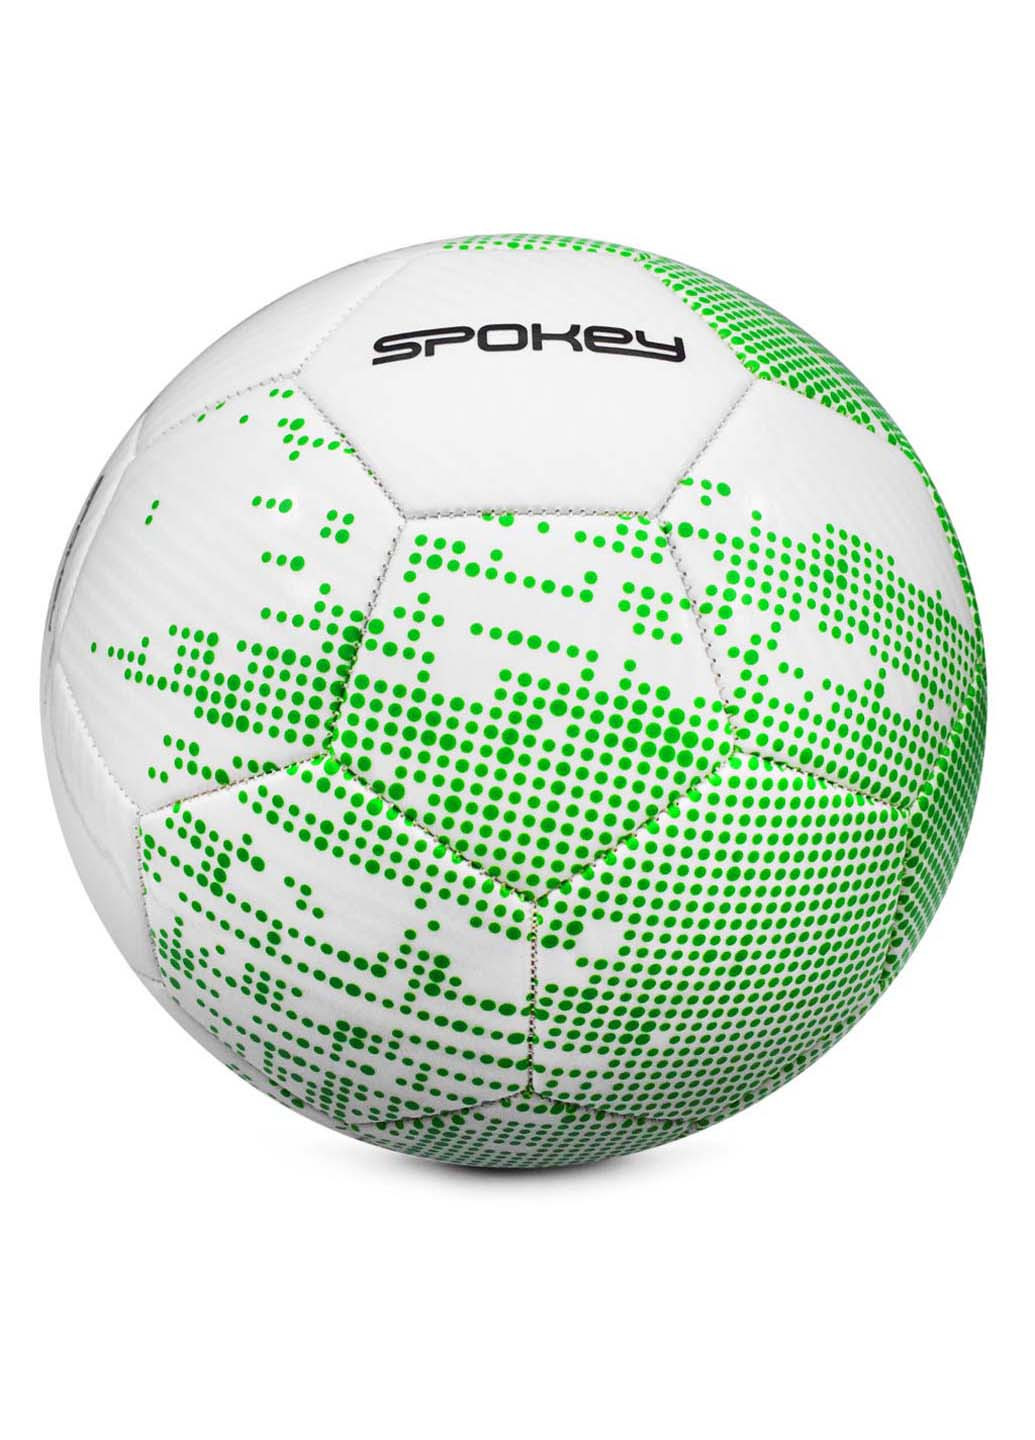 Футбольный мяч AGILIT размер 5 Spokey (257606933)